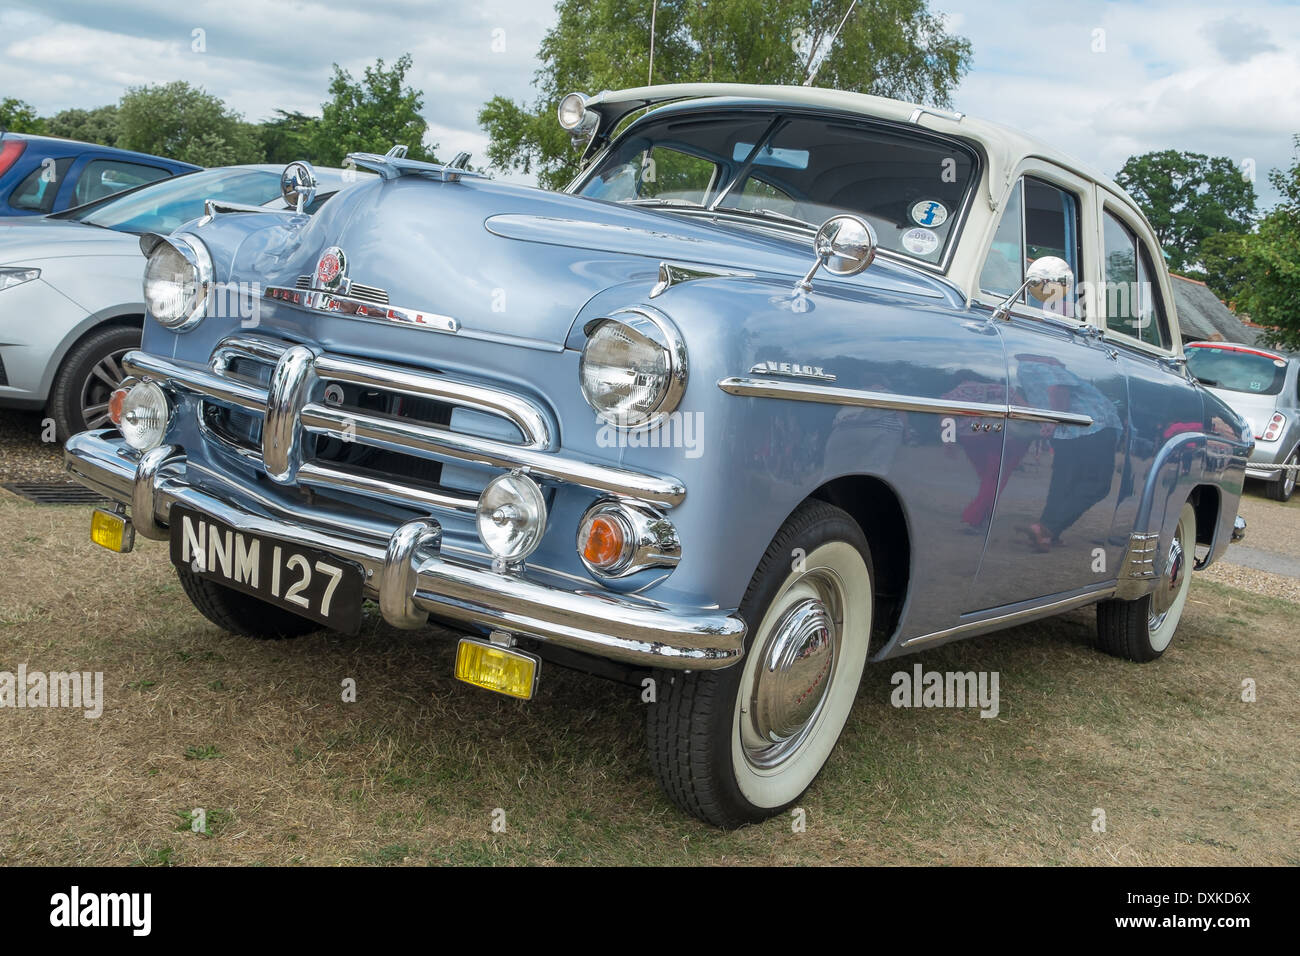 WINDSOR, BERKSHIRE, UK- Augsut 4, 2013: A Blue Vauxhall Wyvern Classic car on show at Windsor Farm Shop car show Stock Photo